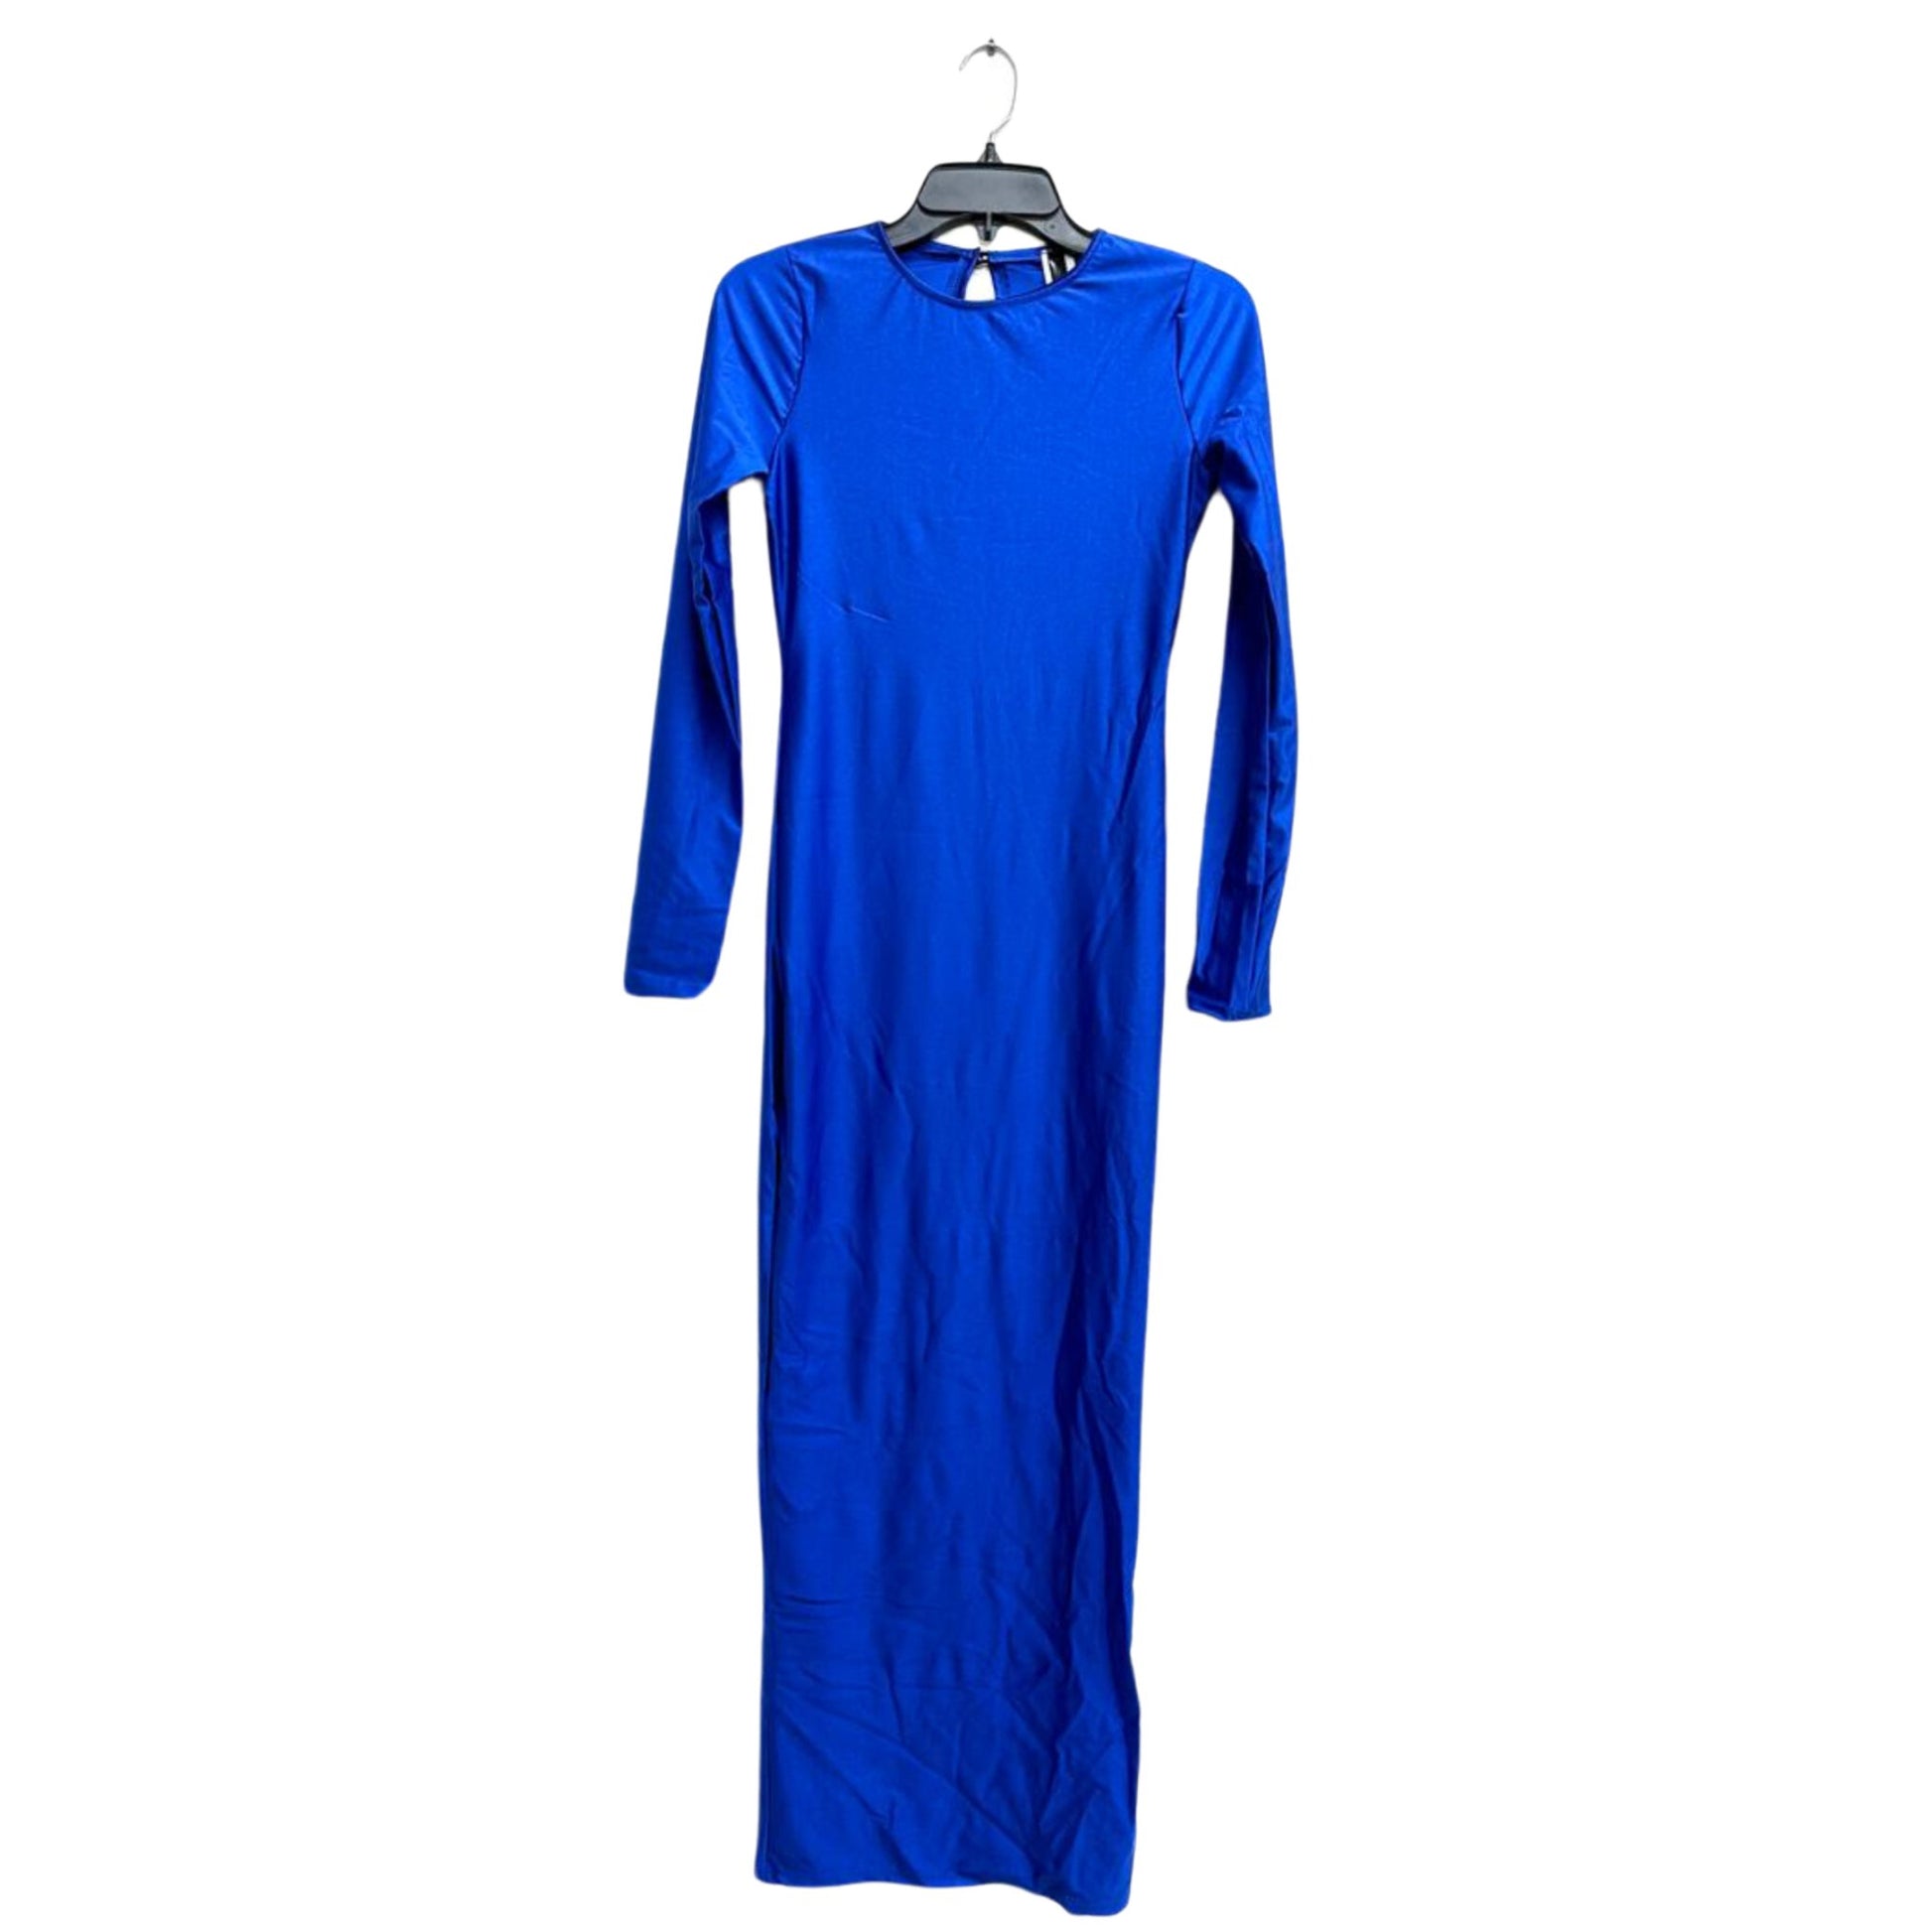 Shiny long dress - Lavish life LLC 